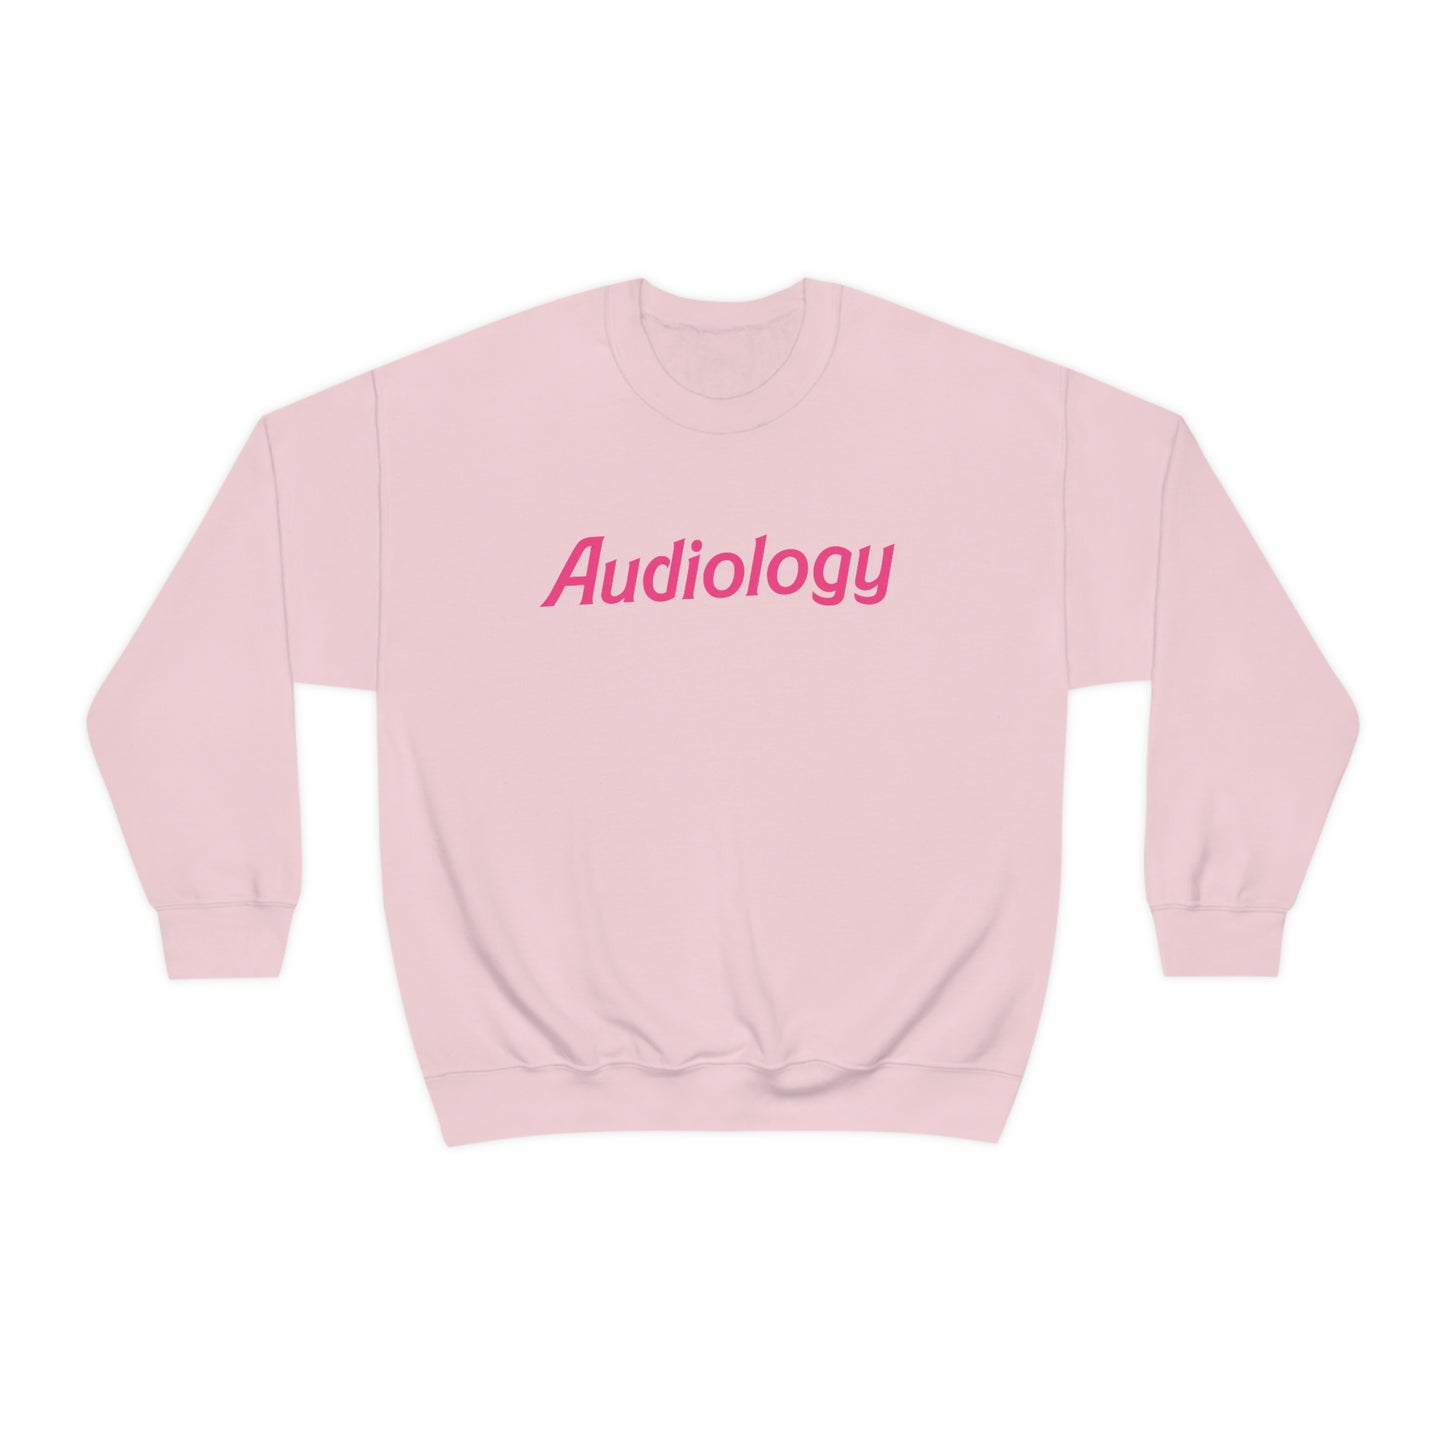 Audiology Crewneck Sweatshirt